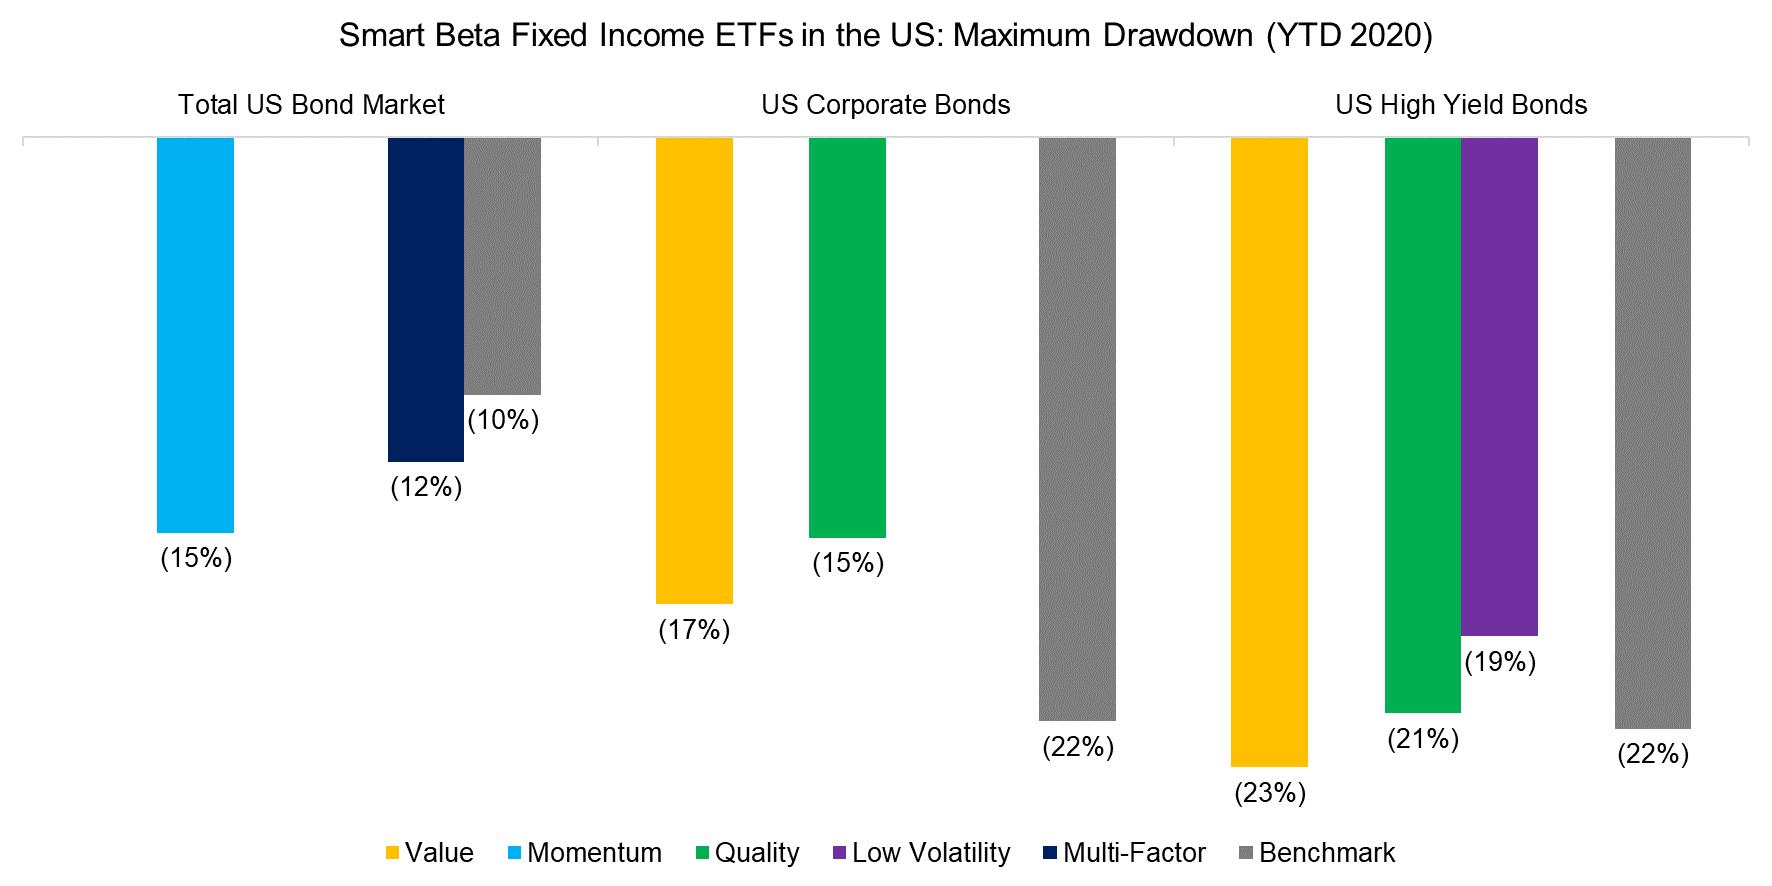 Smart Beta Fixed Income ETFs in the US Maximum Drawdown (YTD 2020)